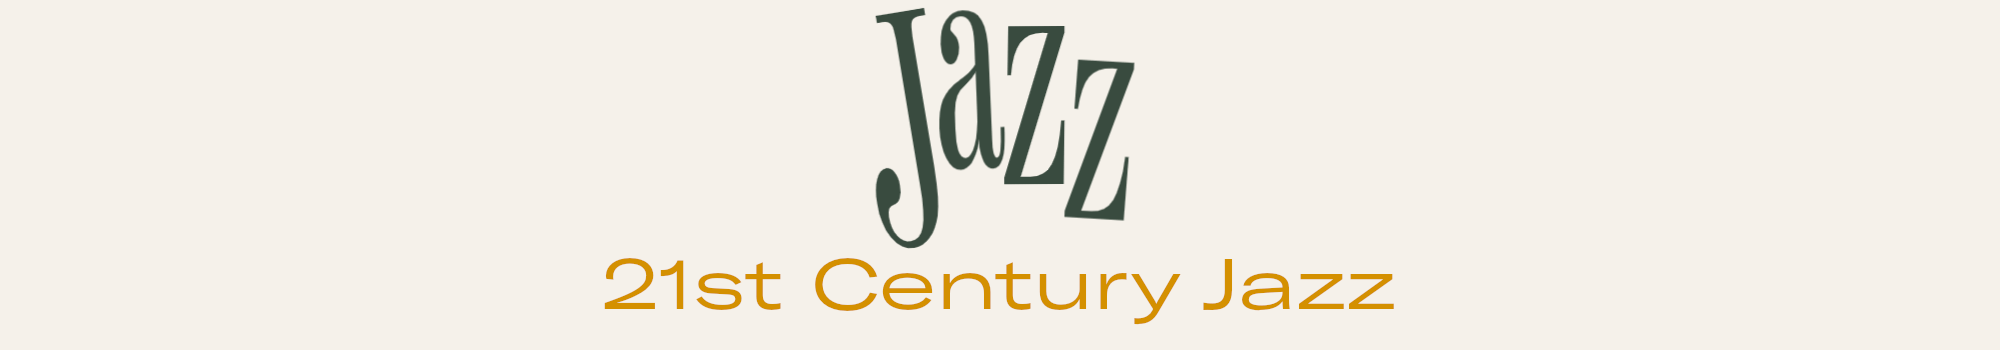 21st Century Jazz - Used